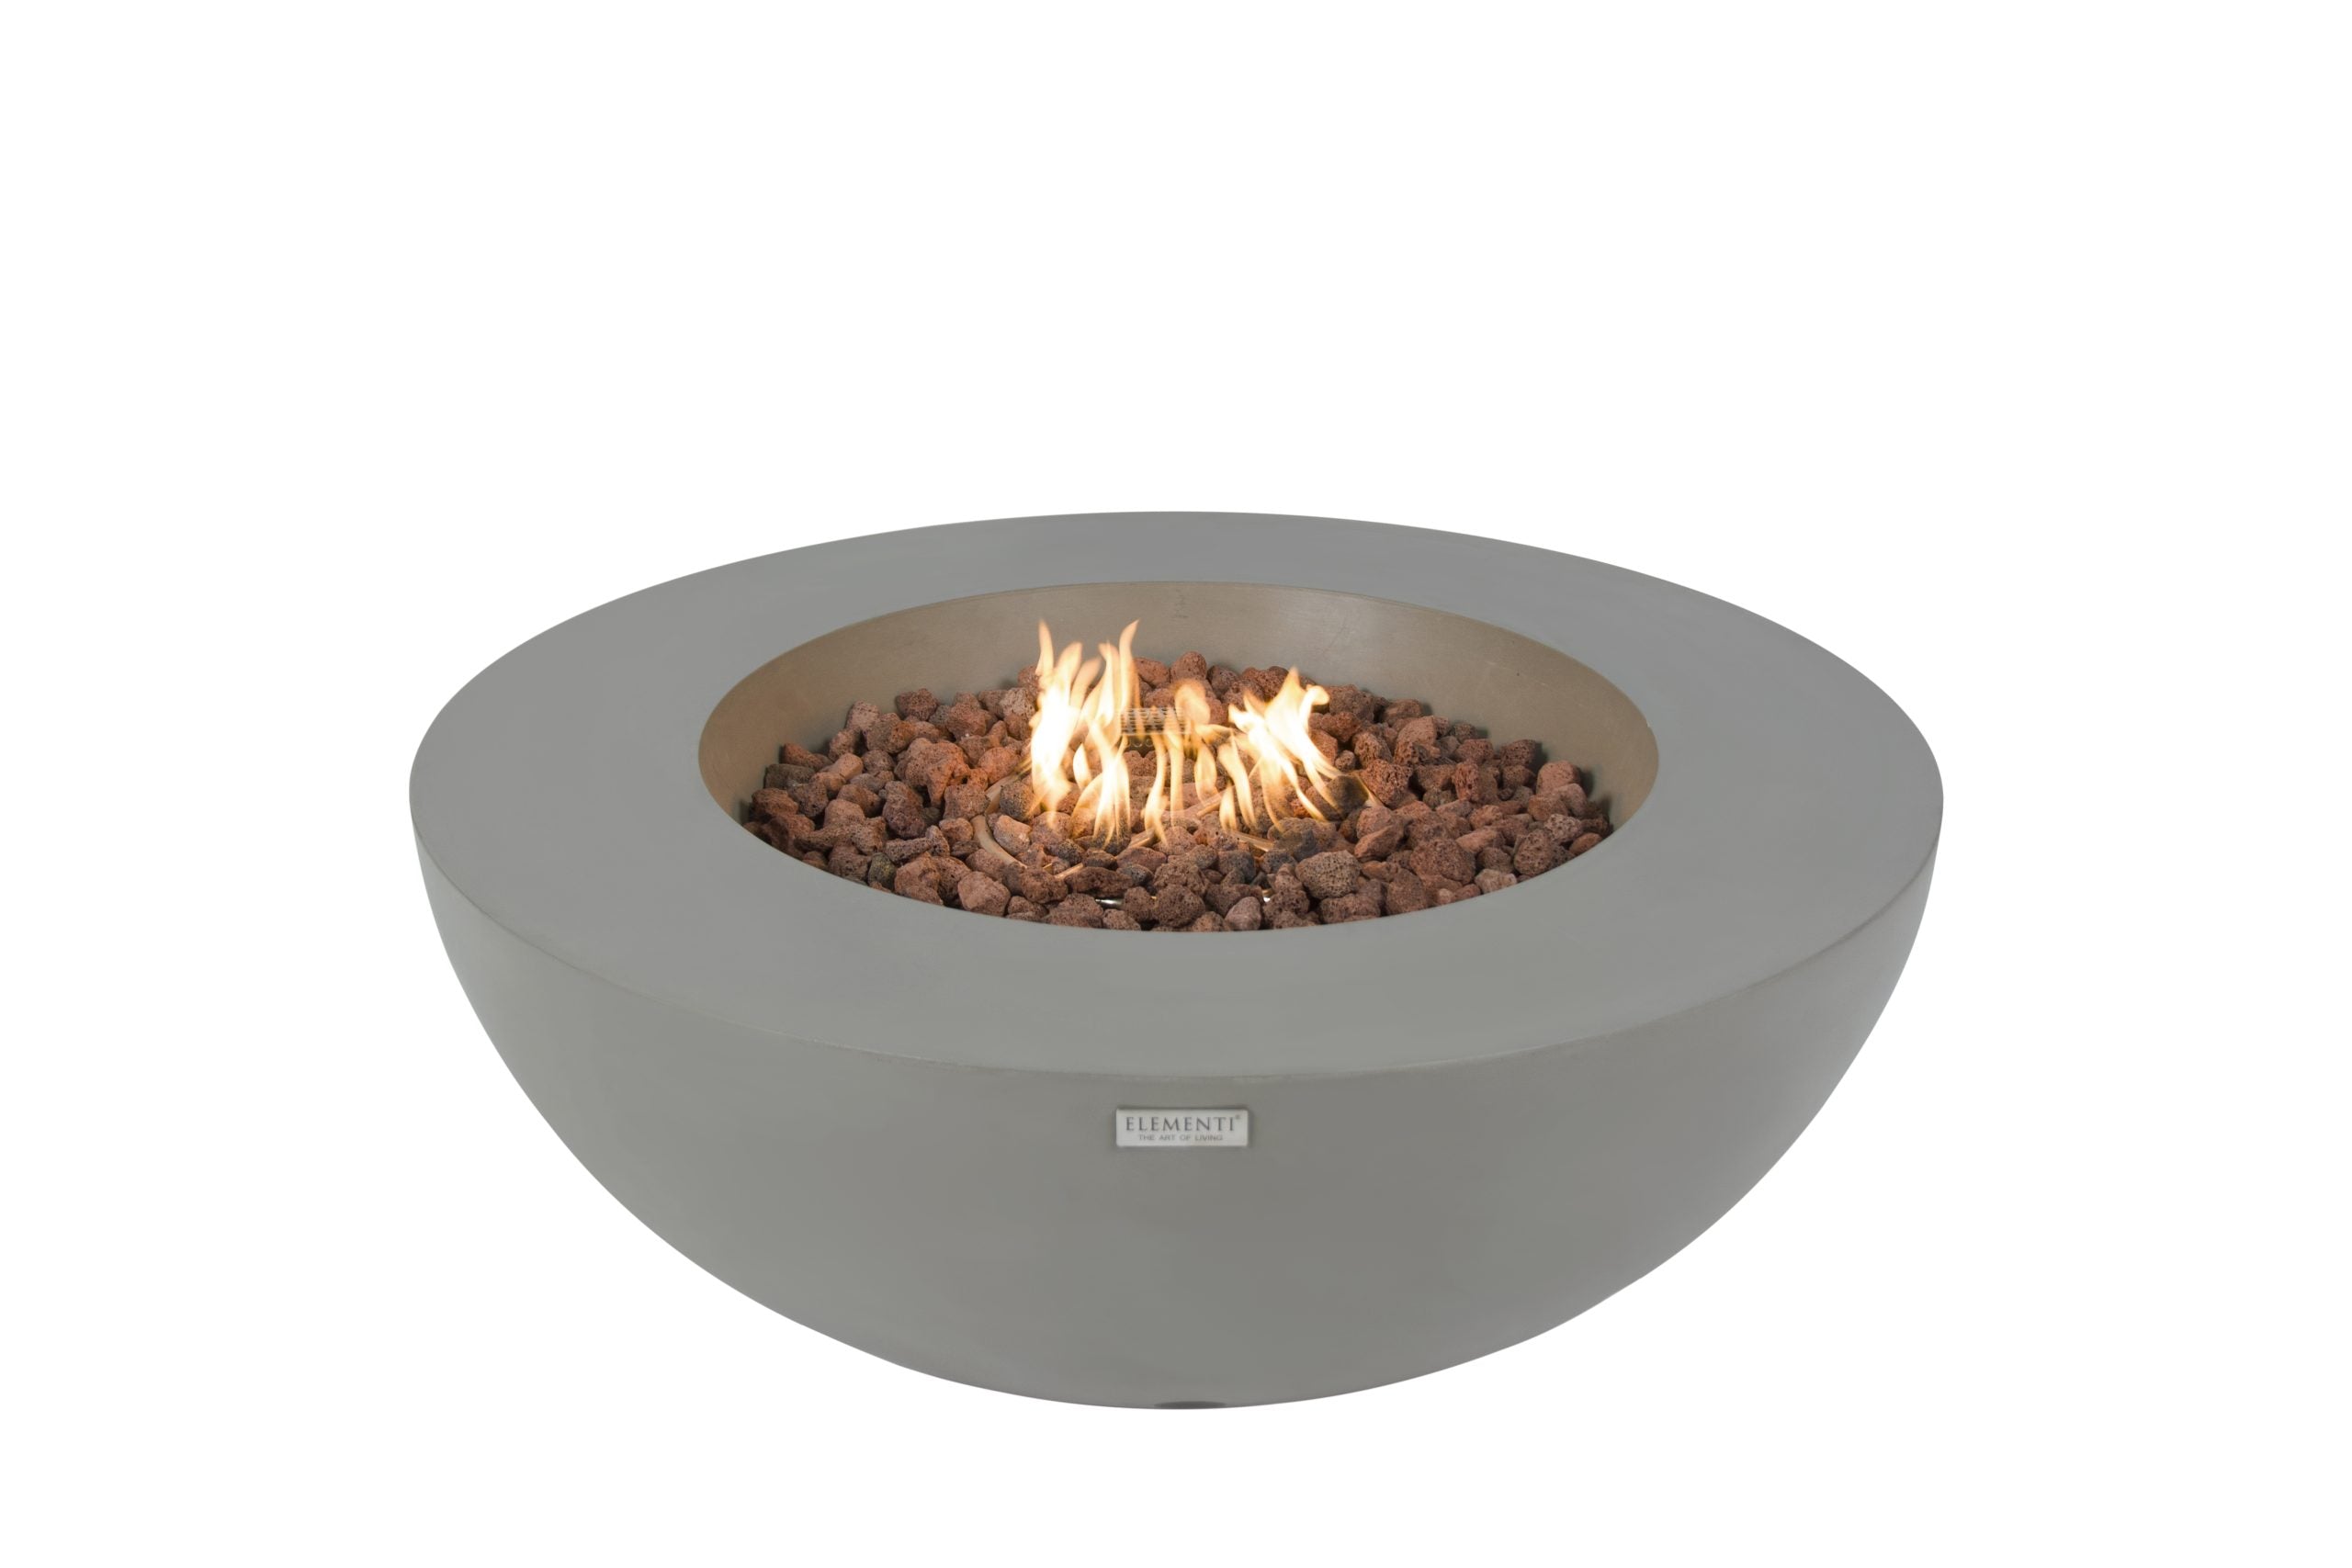 Elementi Lunar Bowl Fire Table - Light Grey